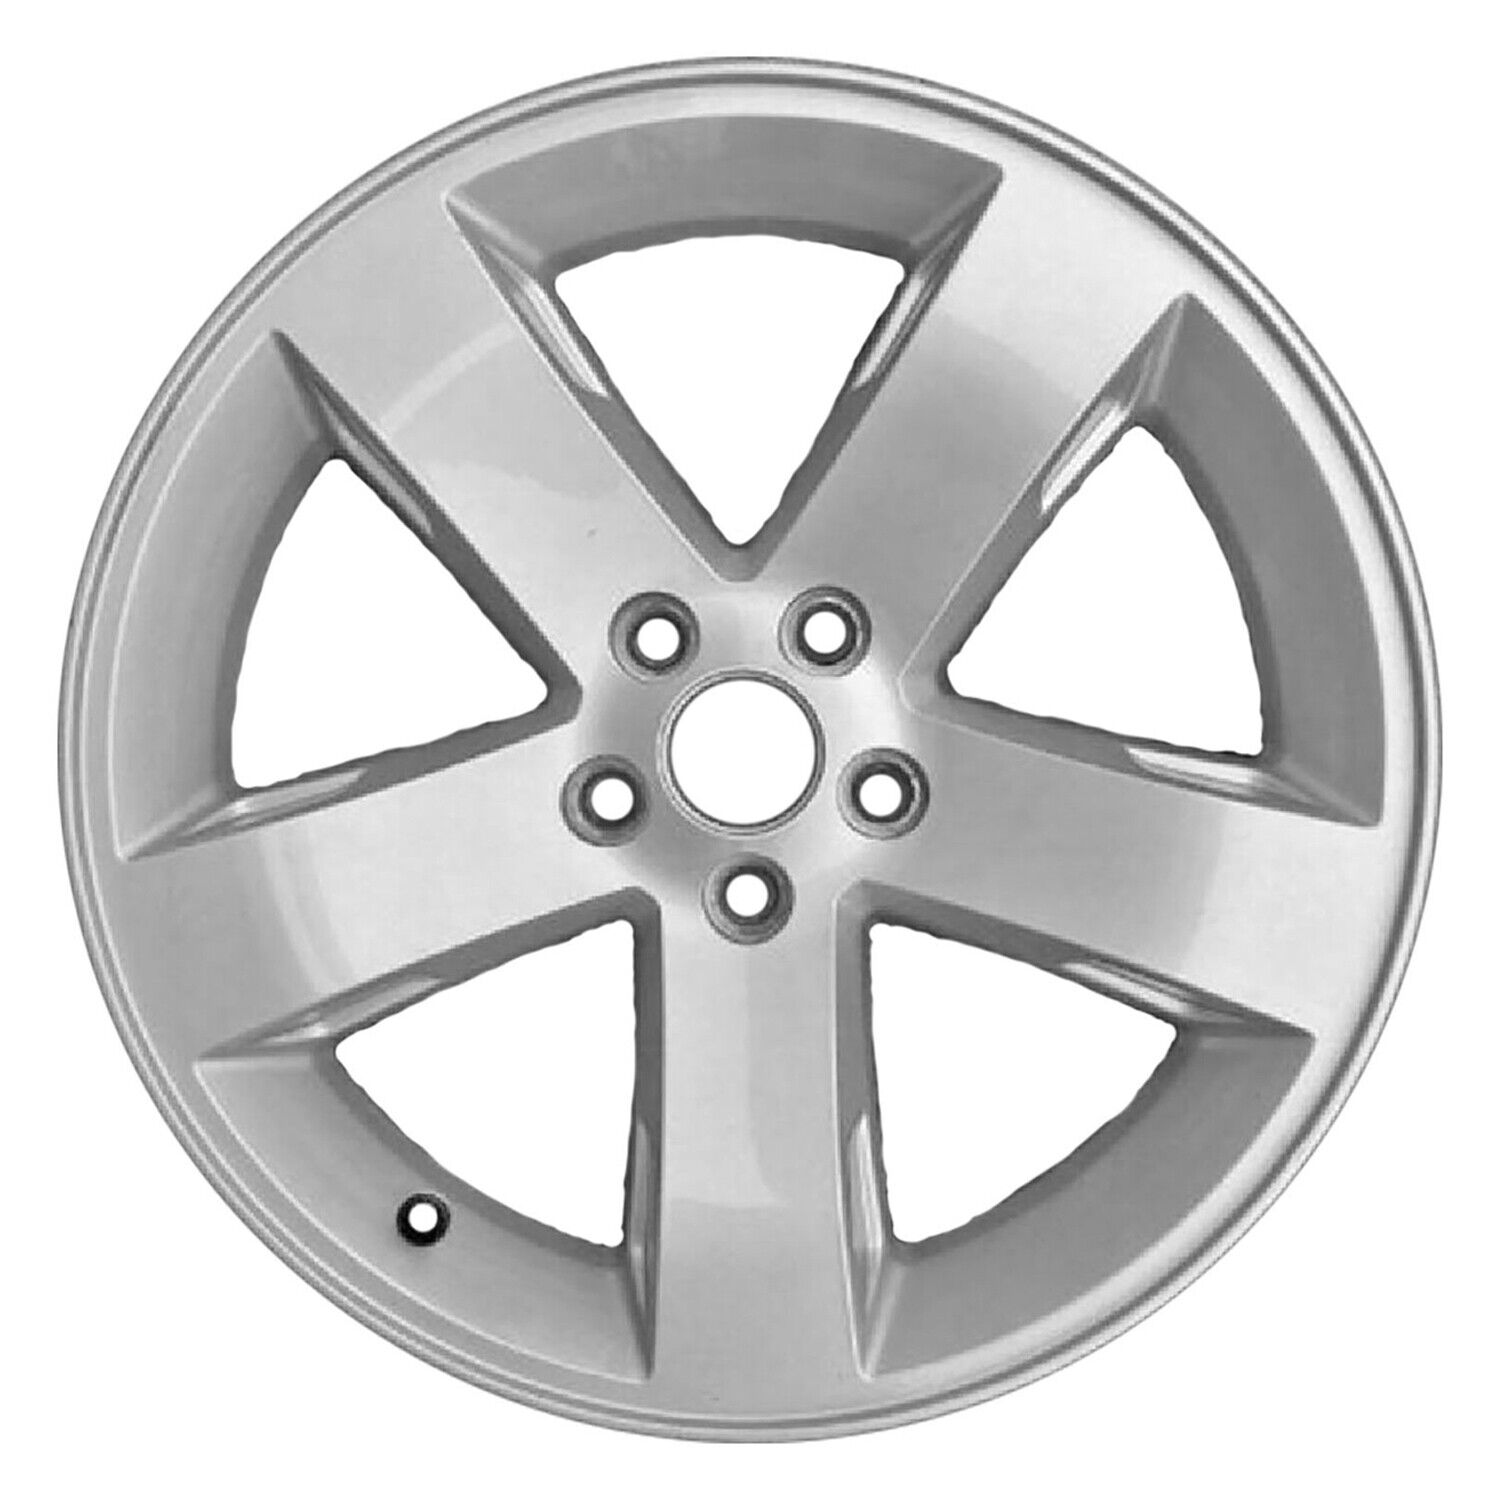 02441 Reconditioned OEM Aluminum Wheel 18x7.5 fits 2009-2014 Dodge Challenger